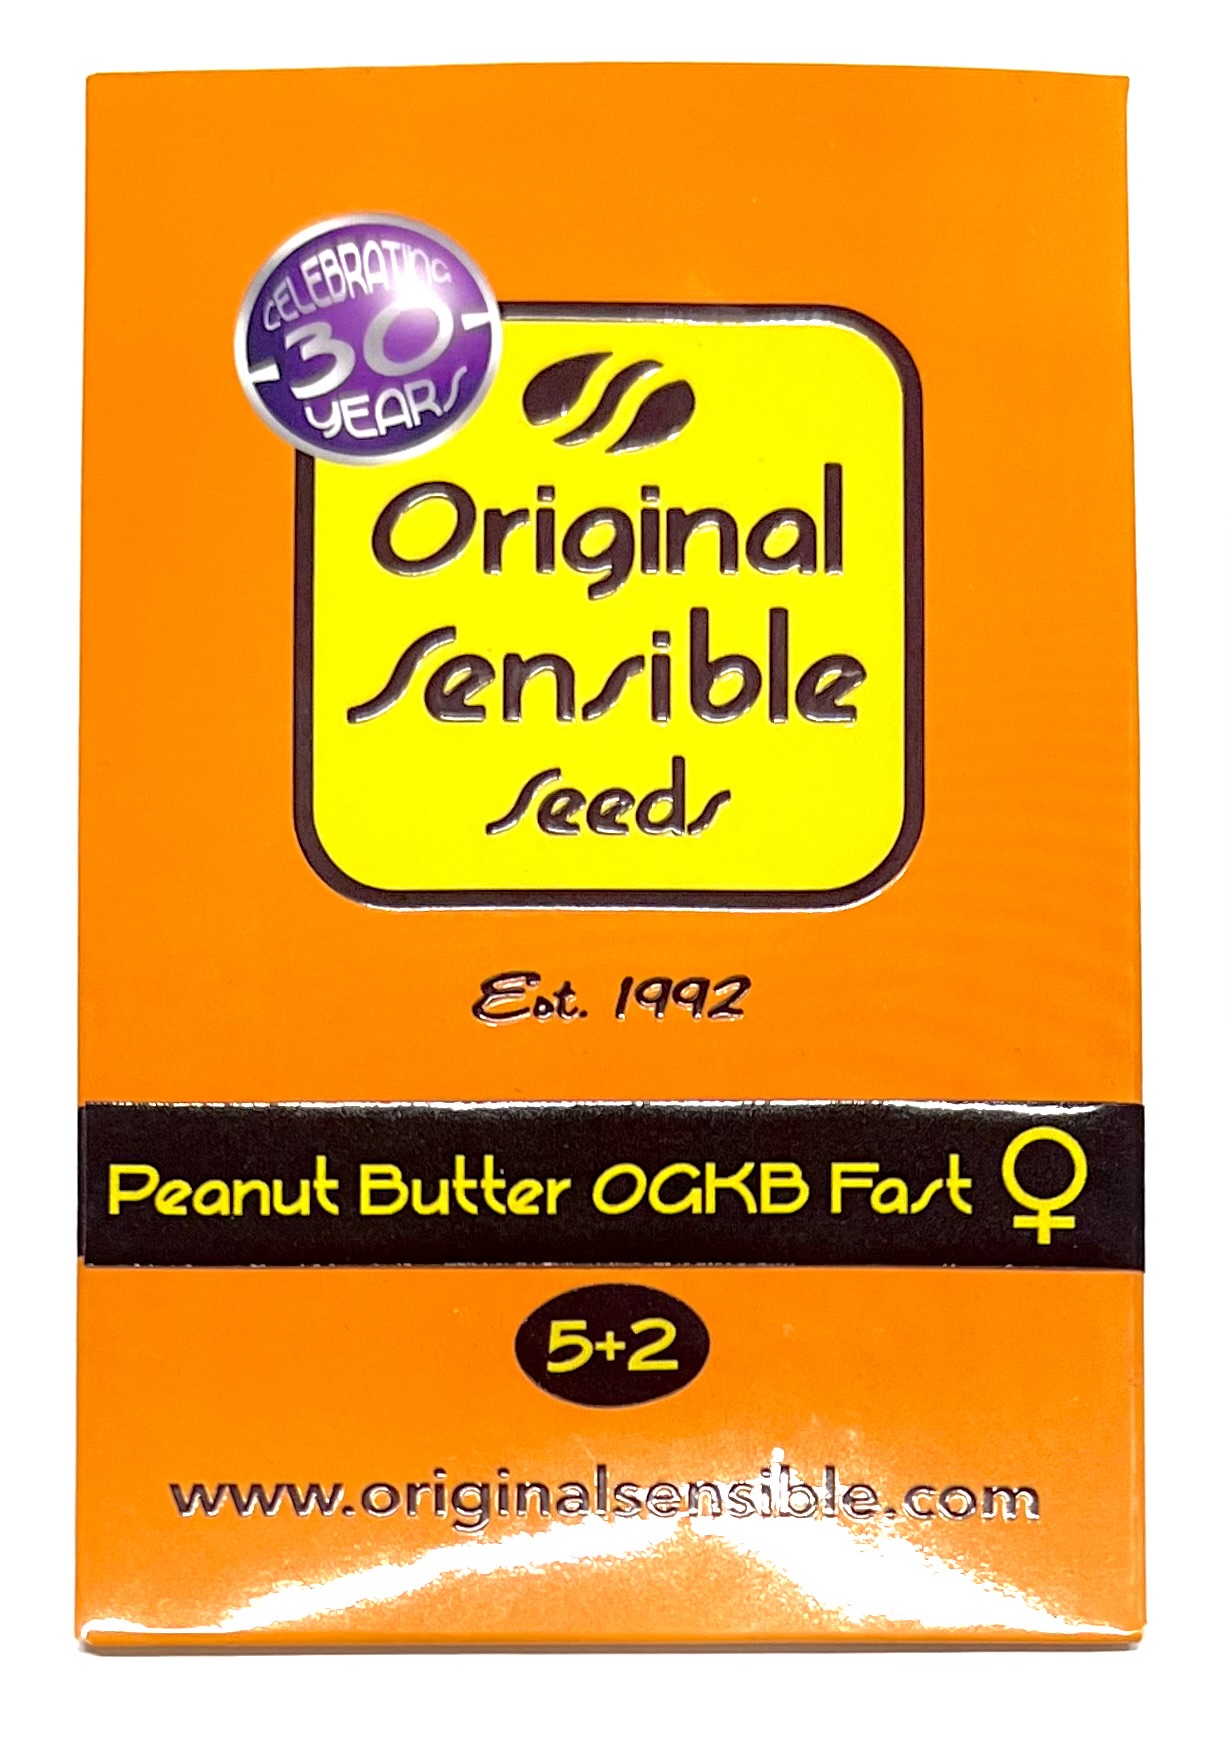 Peanut butter OGKB Fast